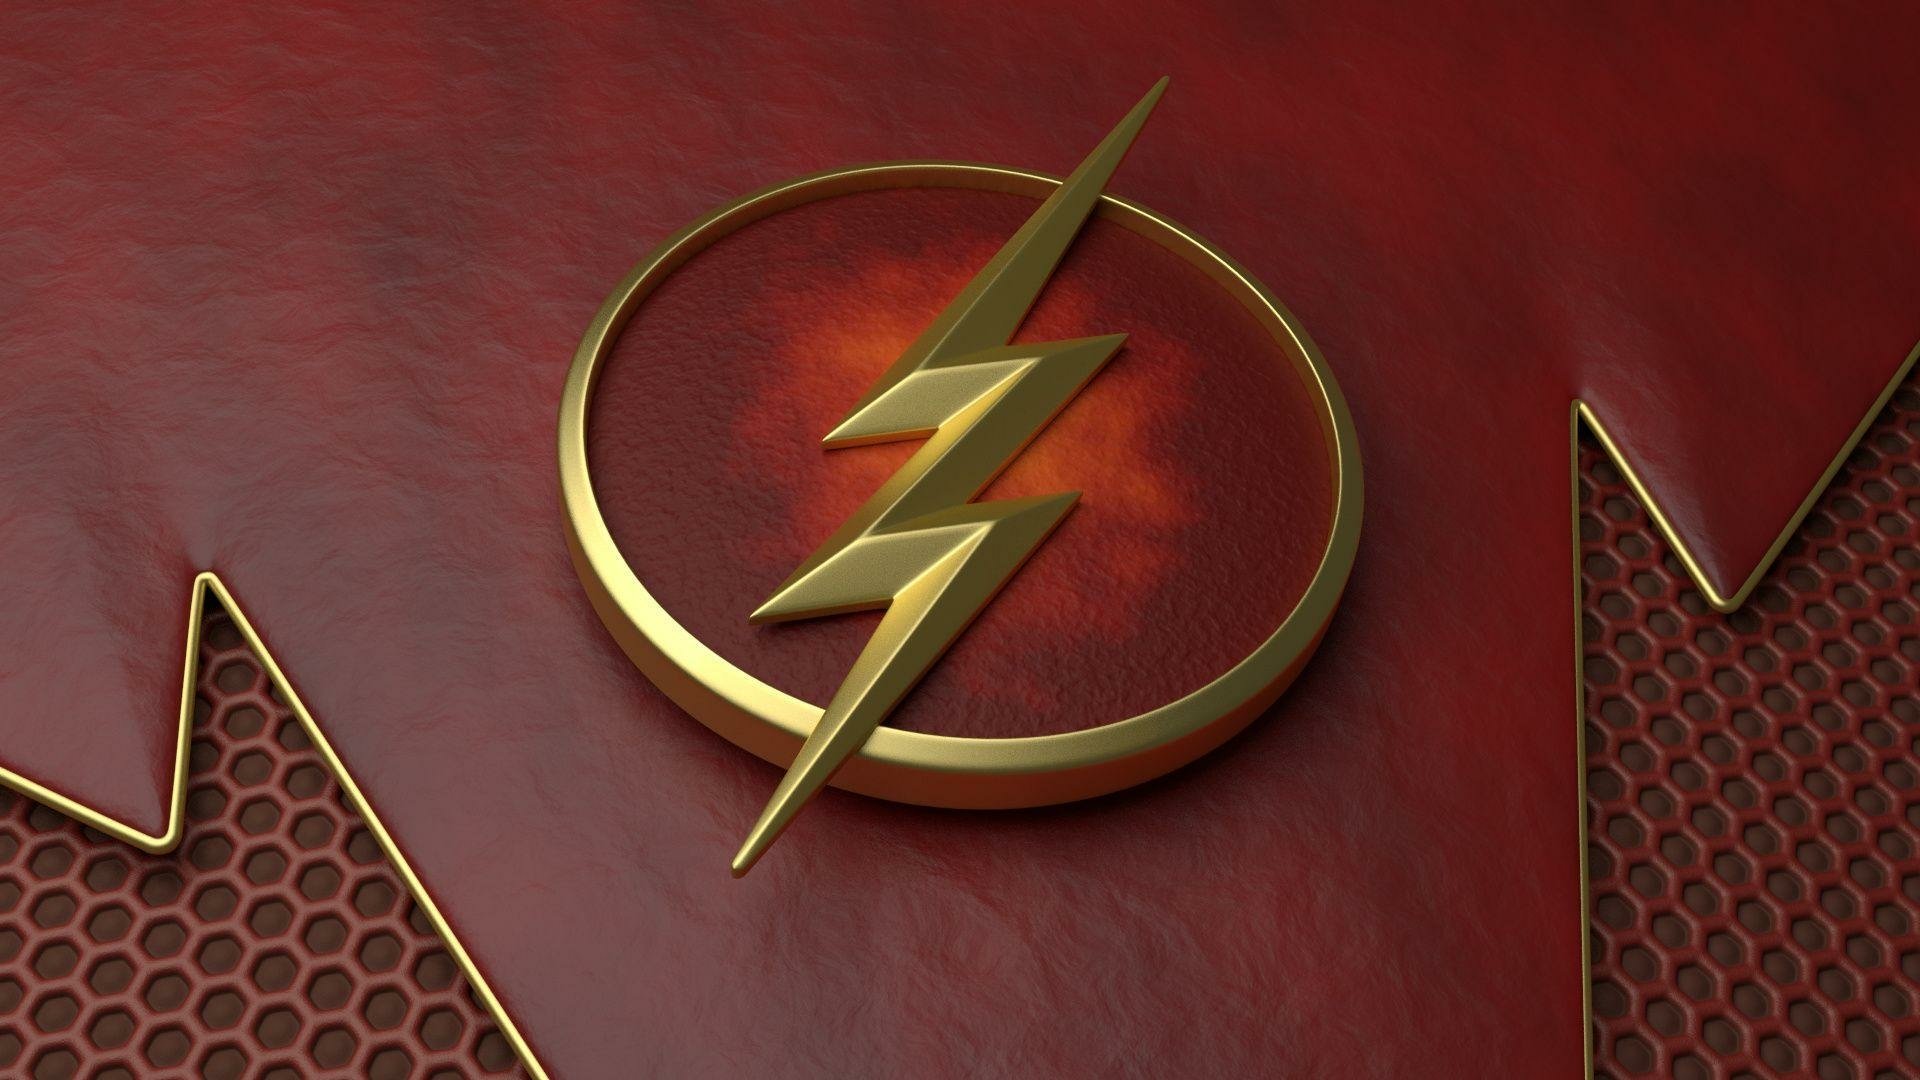 Download TV Show The Flash (2014) HD Wallpaper